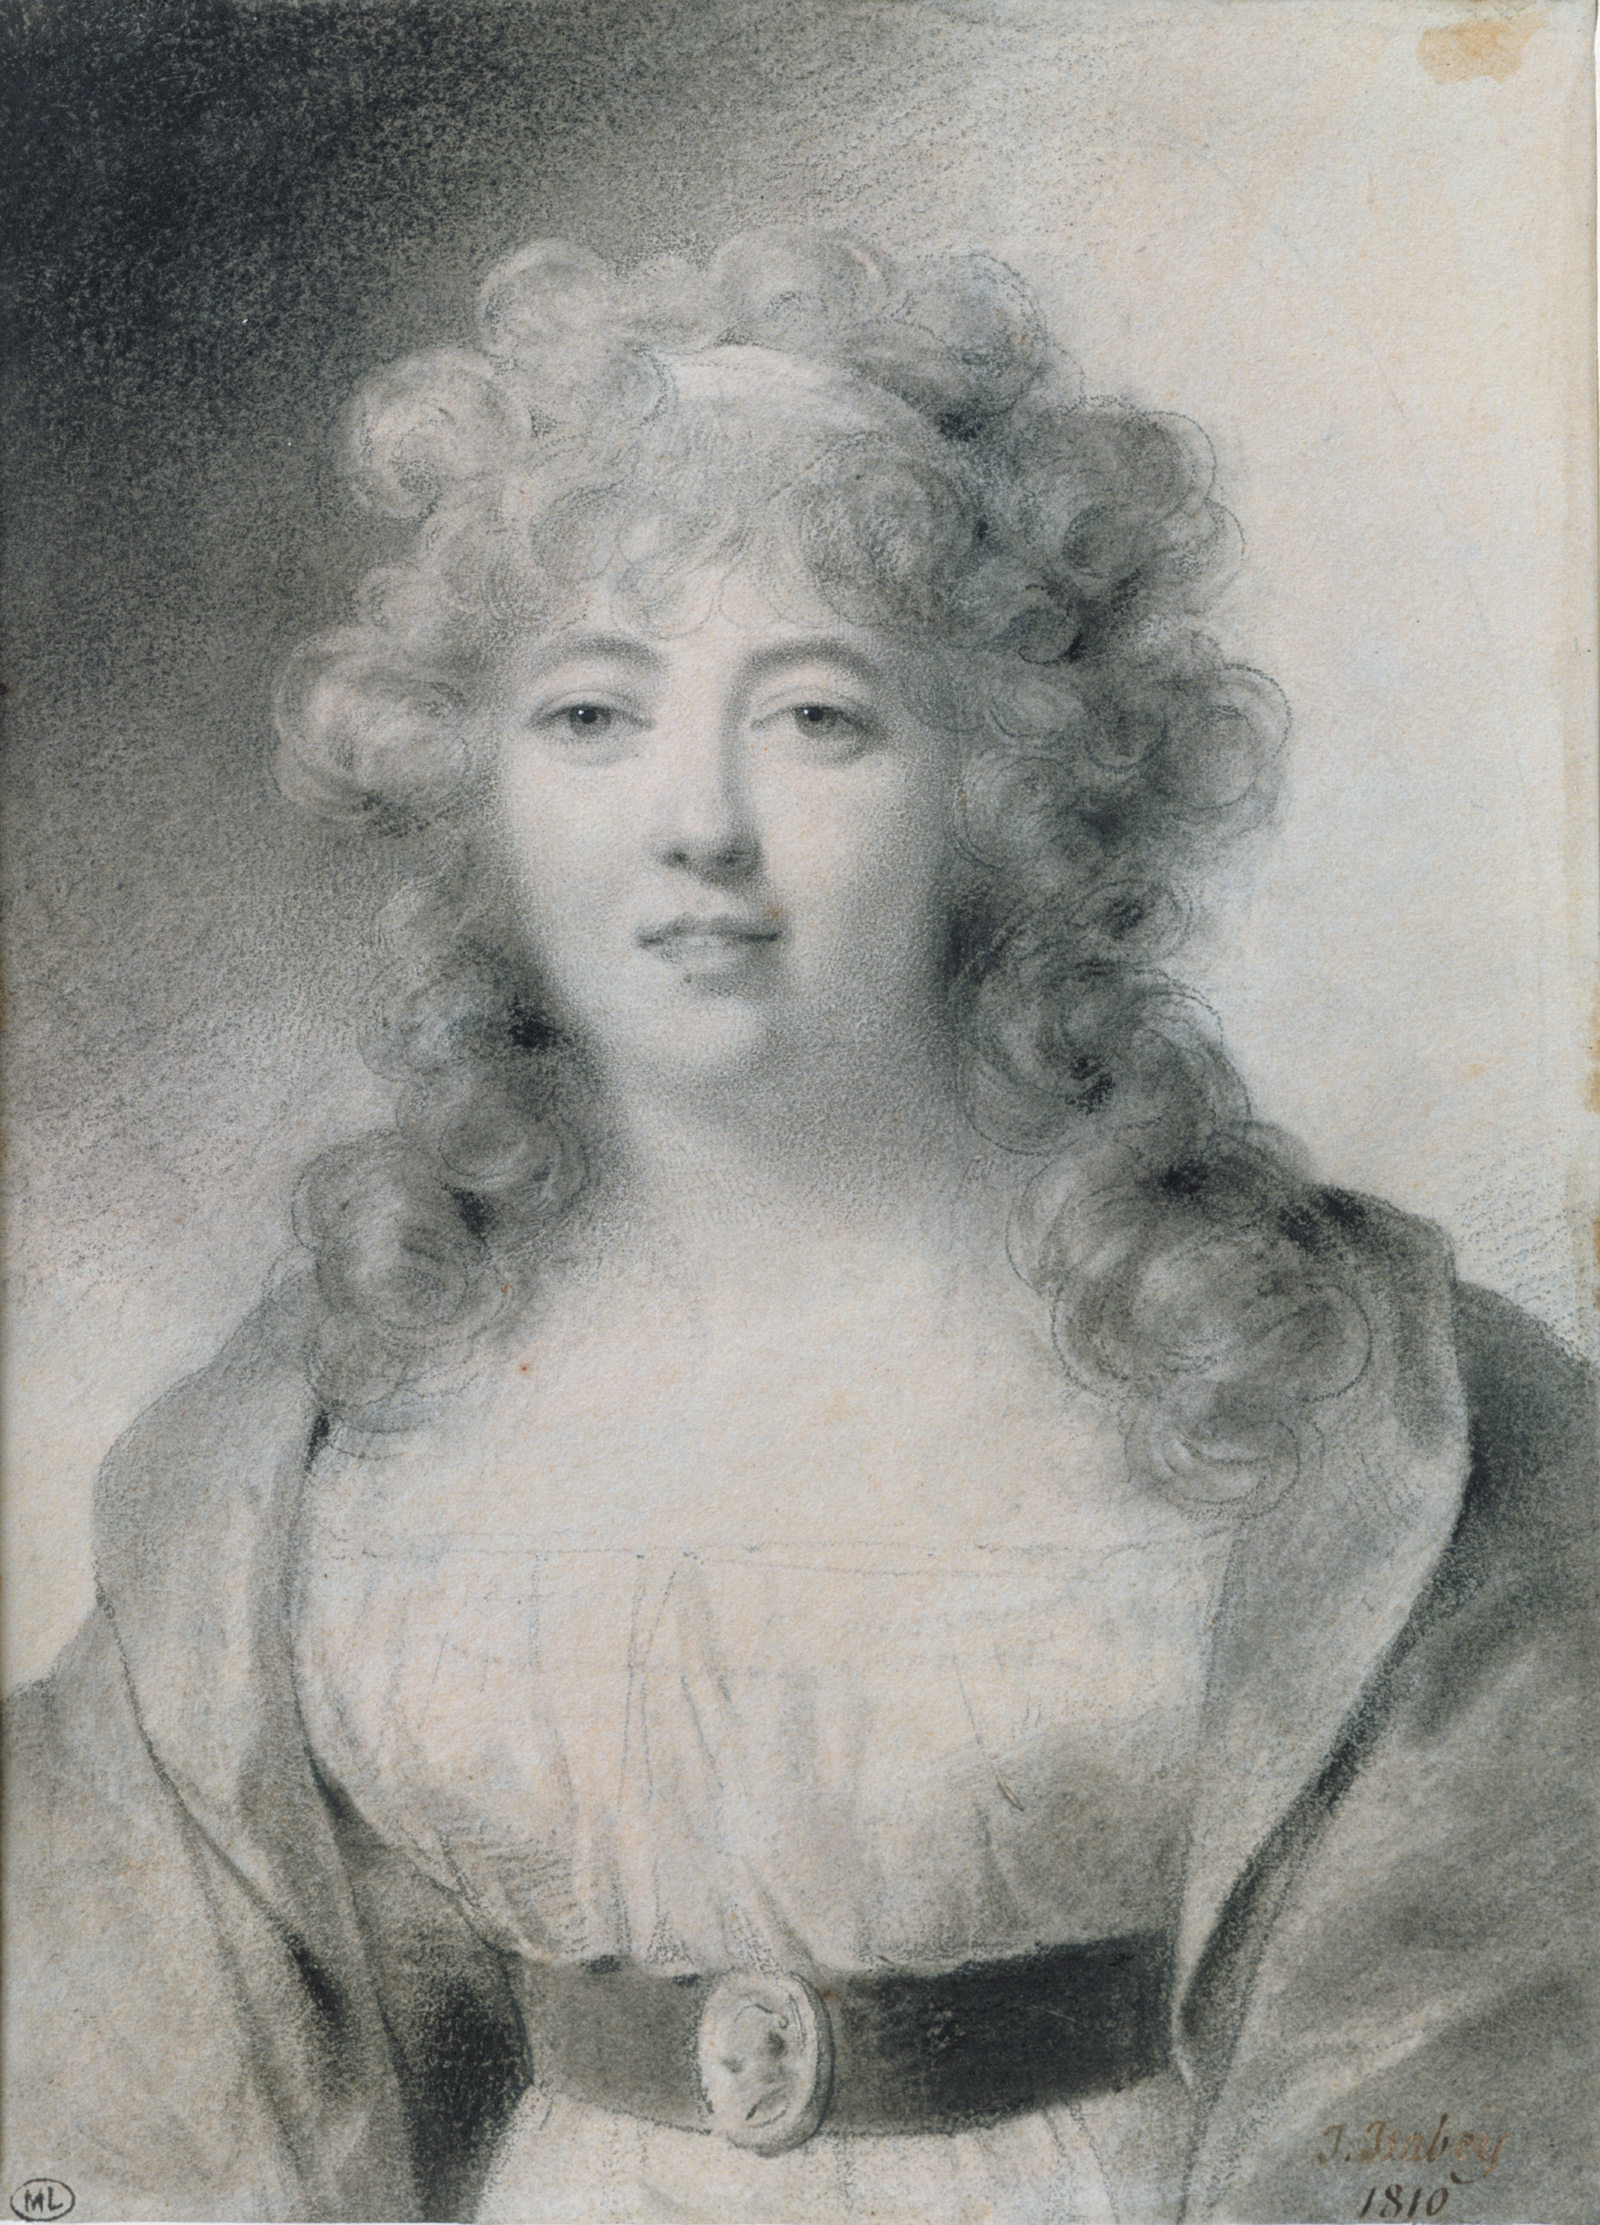 Madame de Staël; portrait by Jean-Baptiste Isabey, 1810